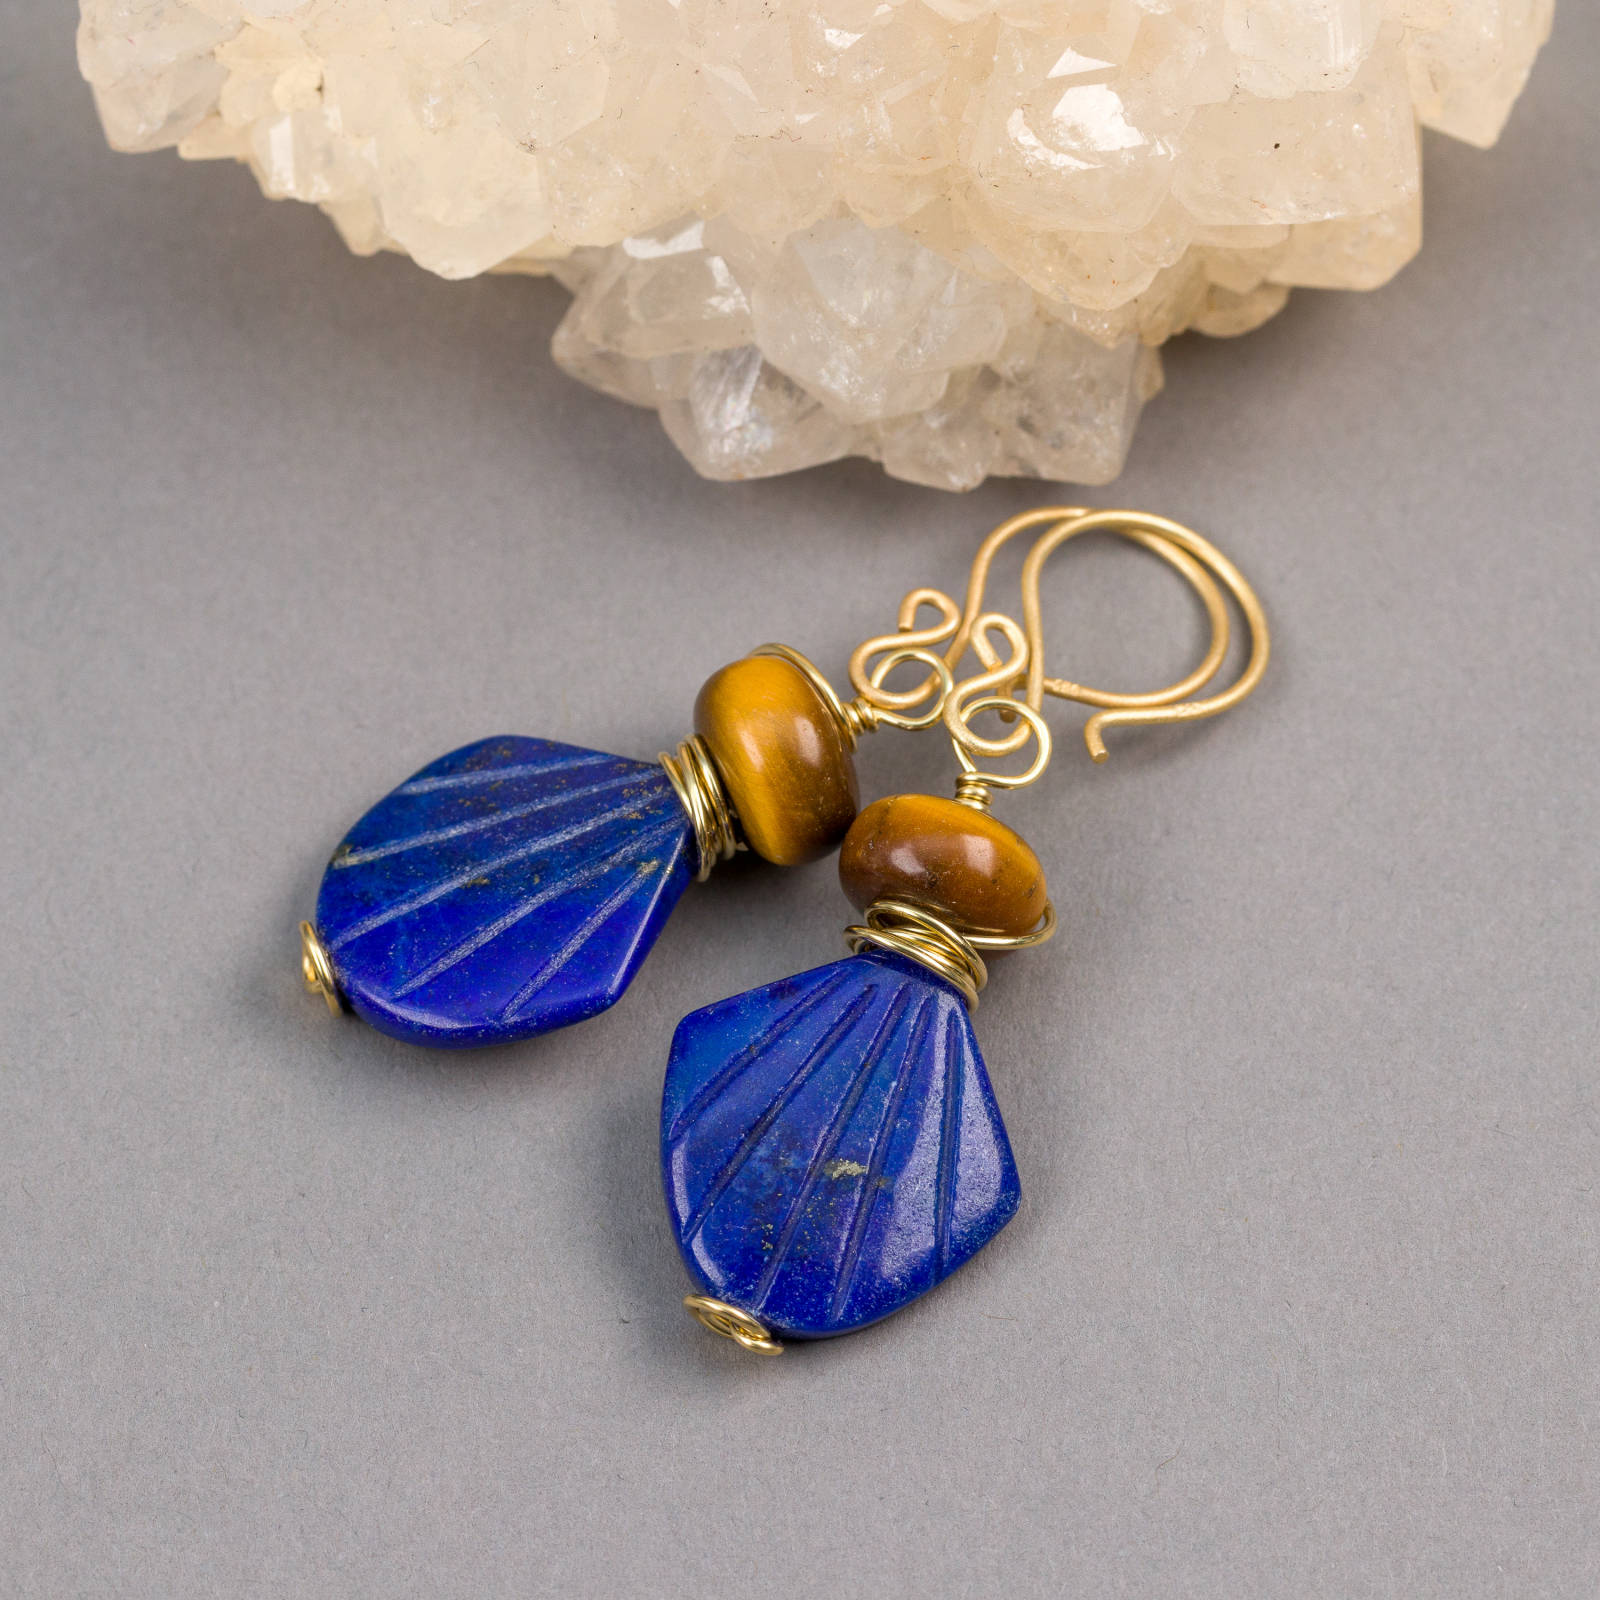 Elegant Swarovski Earrings With Crystal Royal Blue Stones - Amoliconcepts-baongoctrading.com.vn